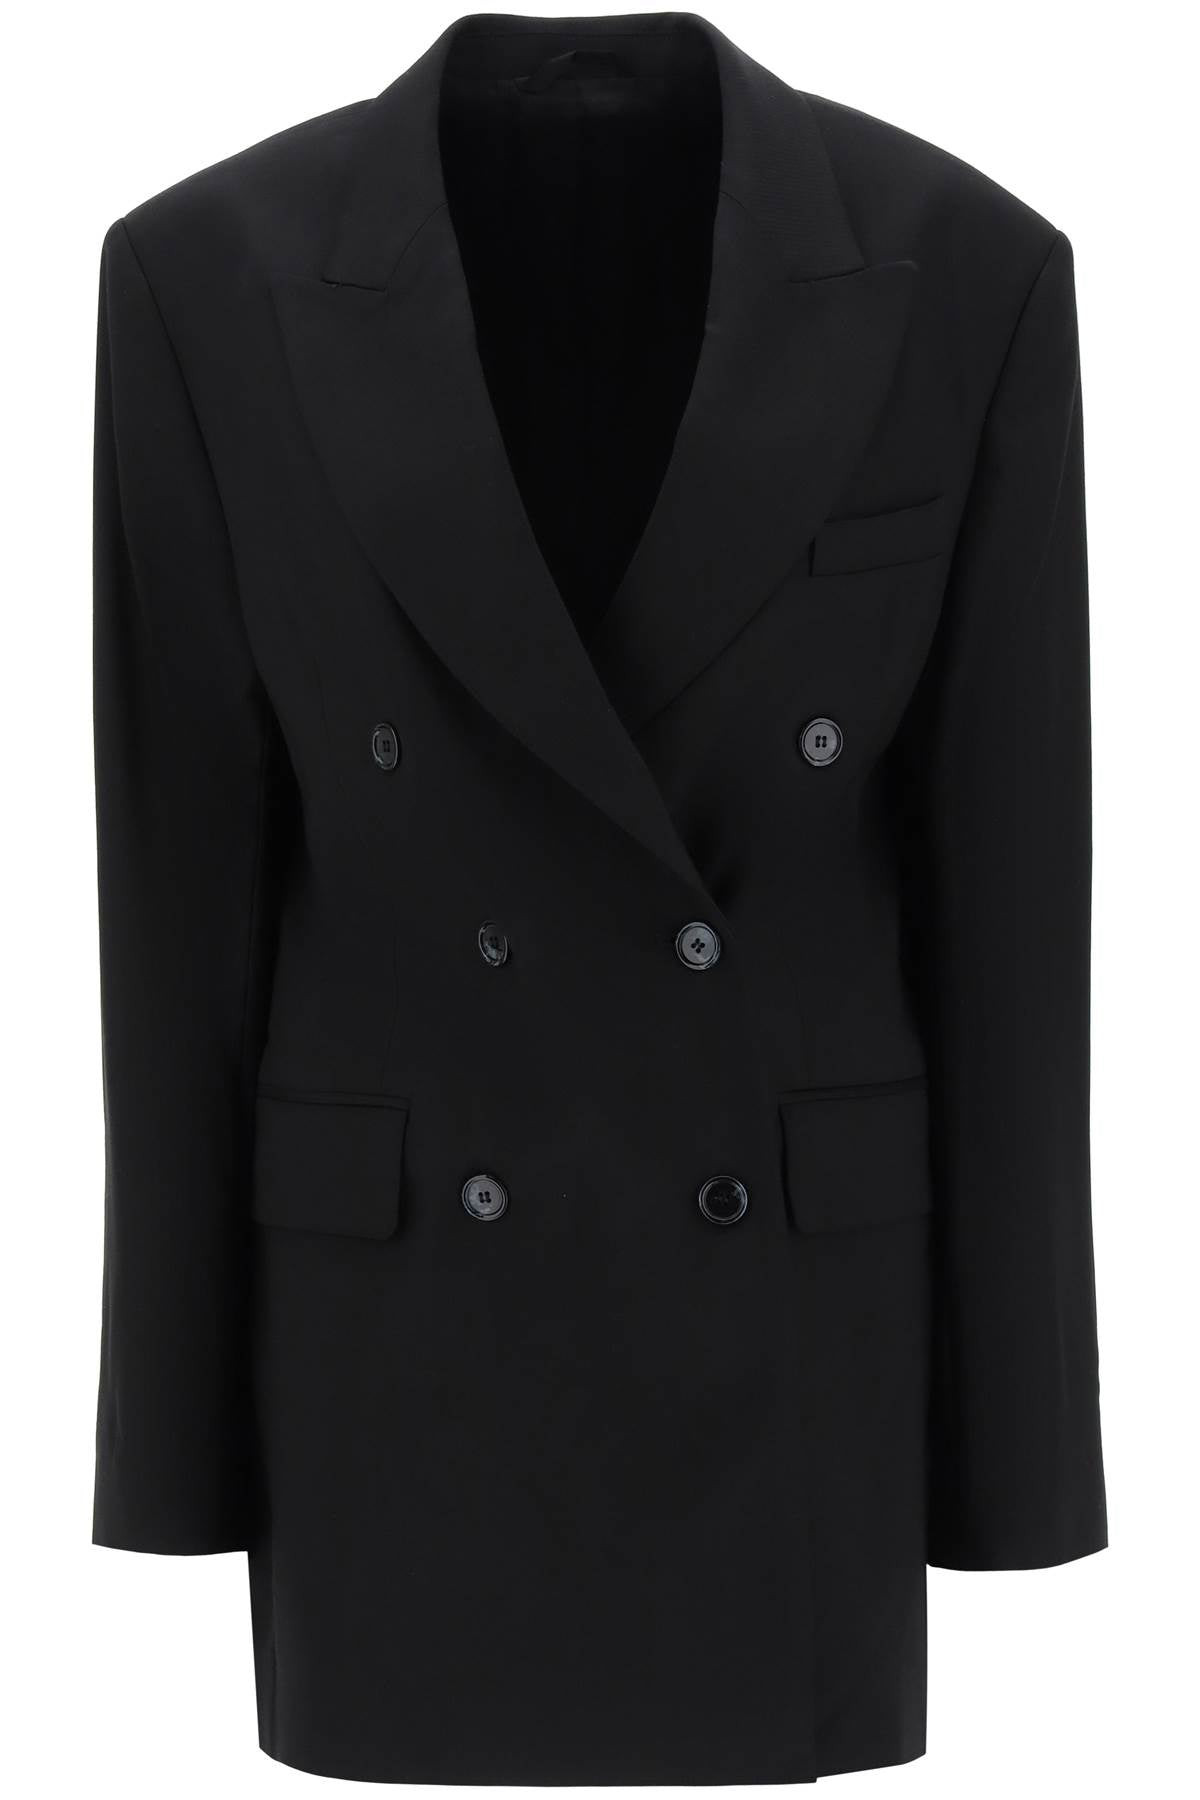 Acne Studios Sophisticated Double-breasted Jacket In Herringbone Fabric In Black